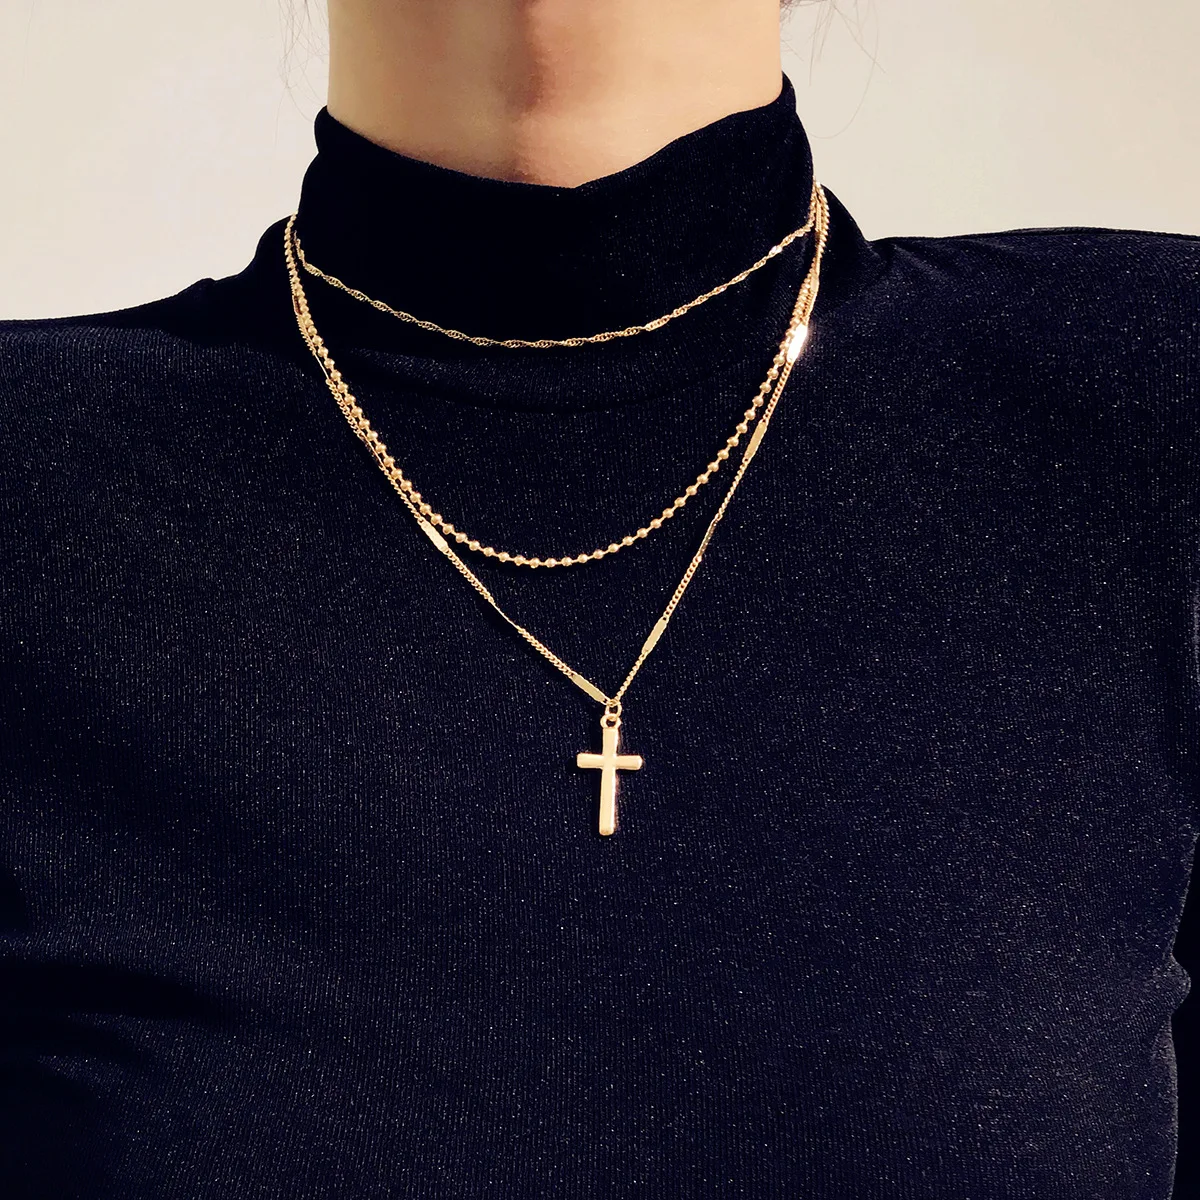 fashion jewelry gold layered cross pendant choker necklace for women